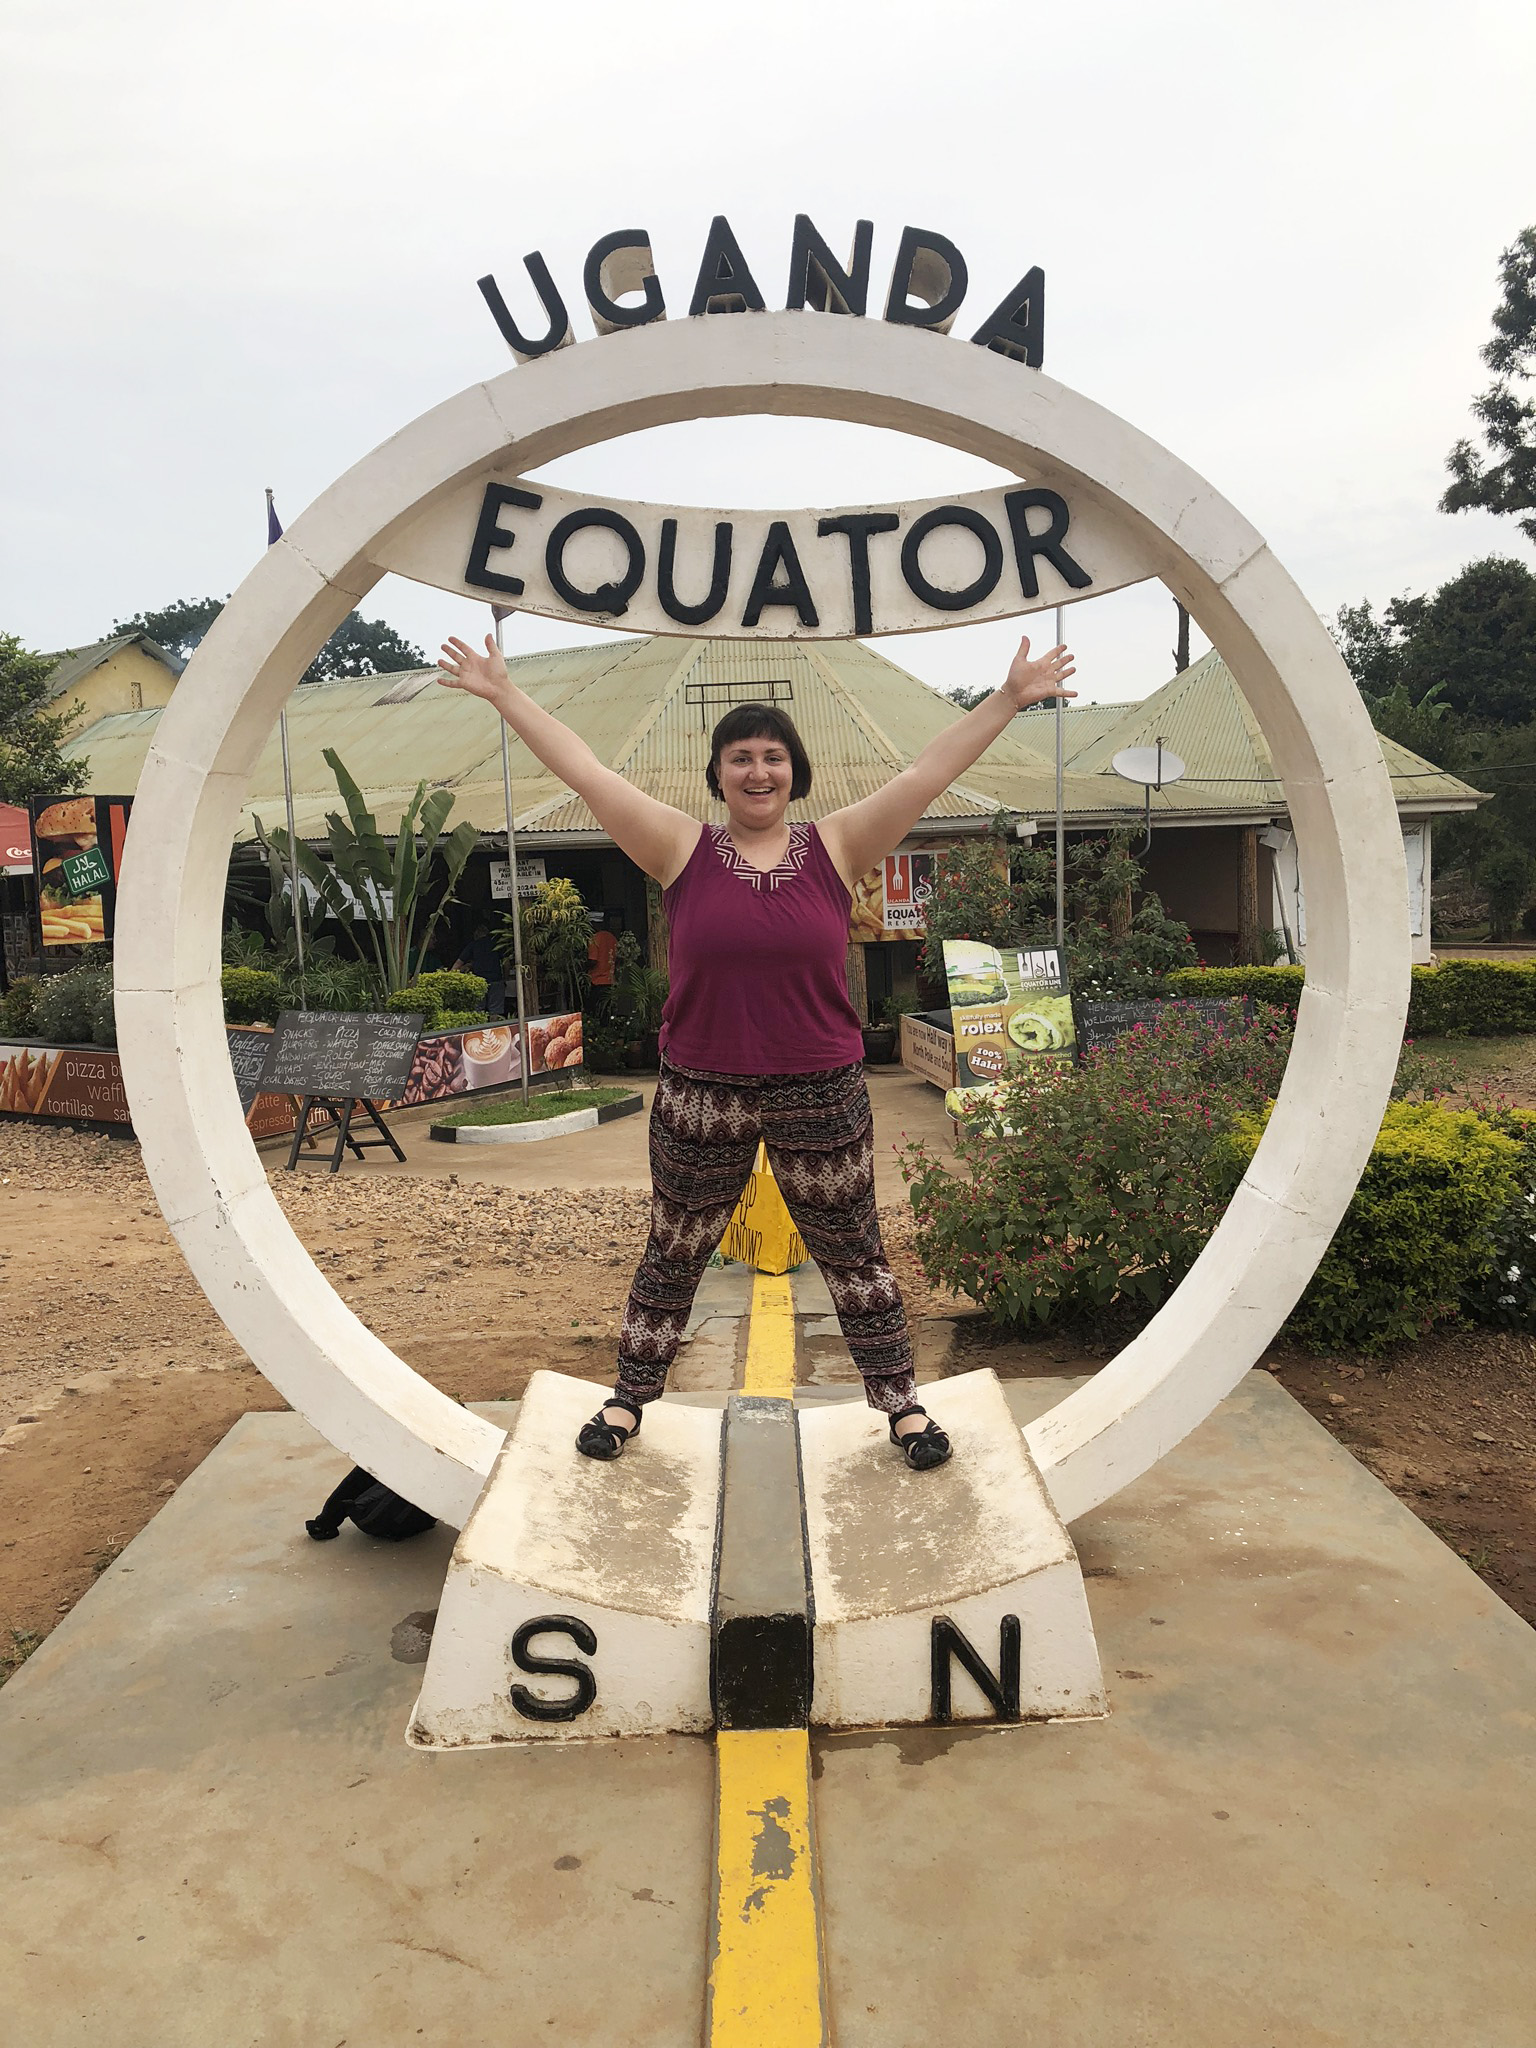 Julia Kramer inside a statue that says "Uganda Equator"